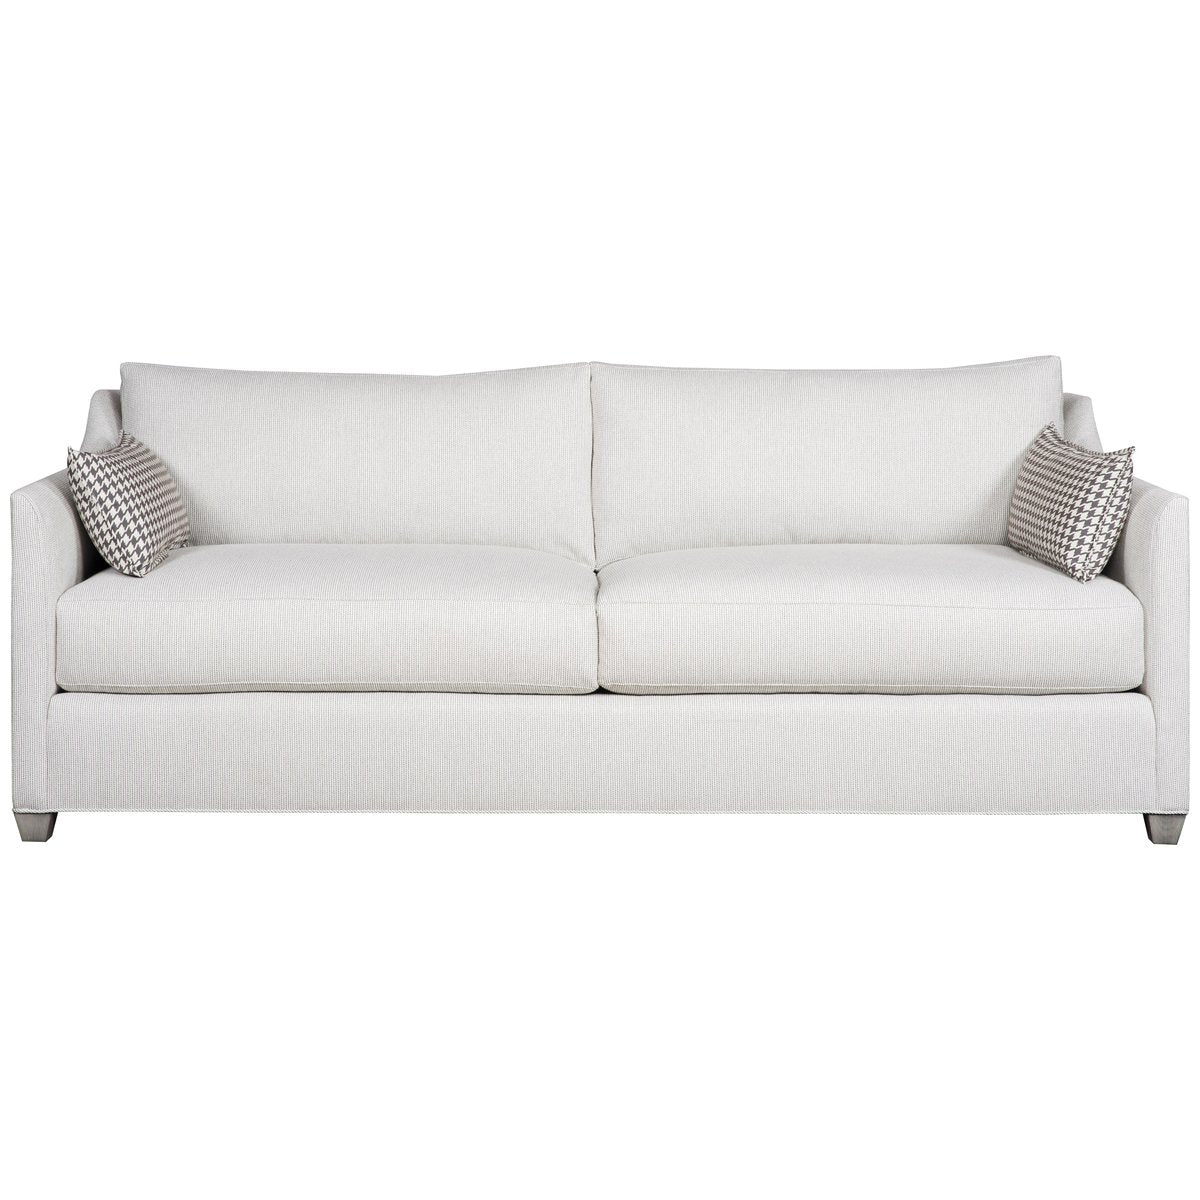 Vanguard Furniture Newlin Sleep Sofa